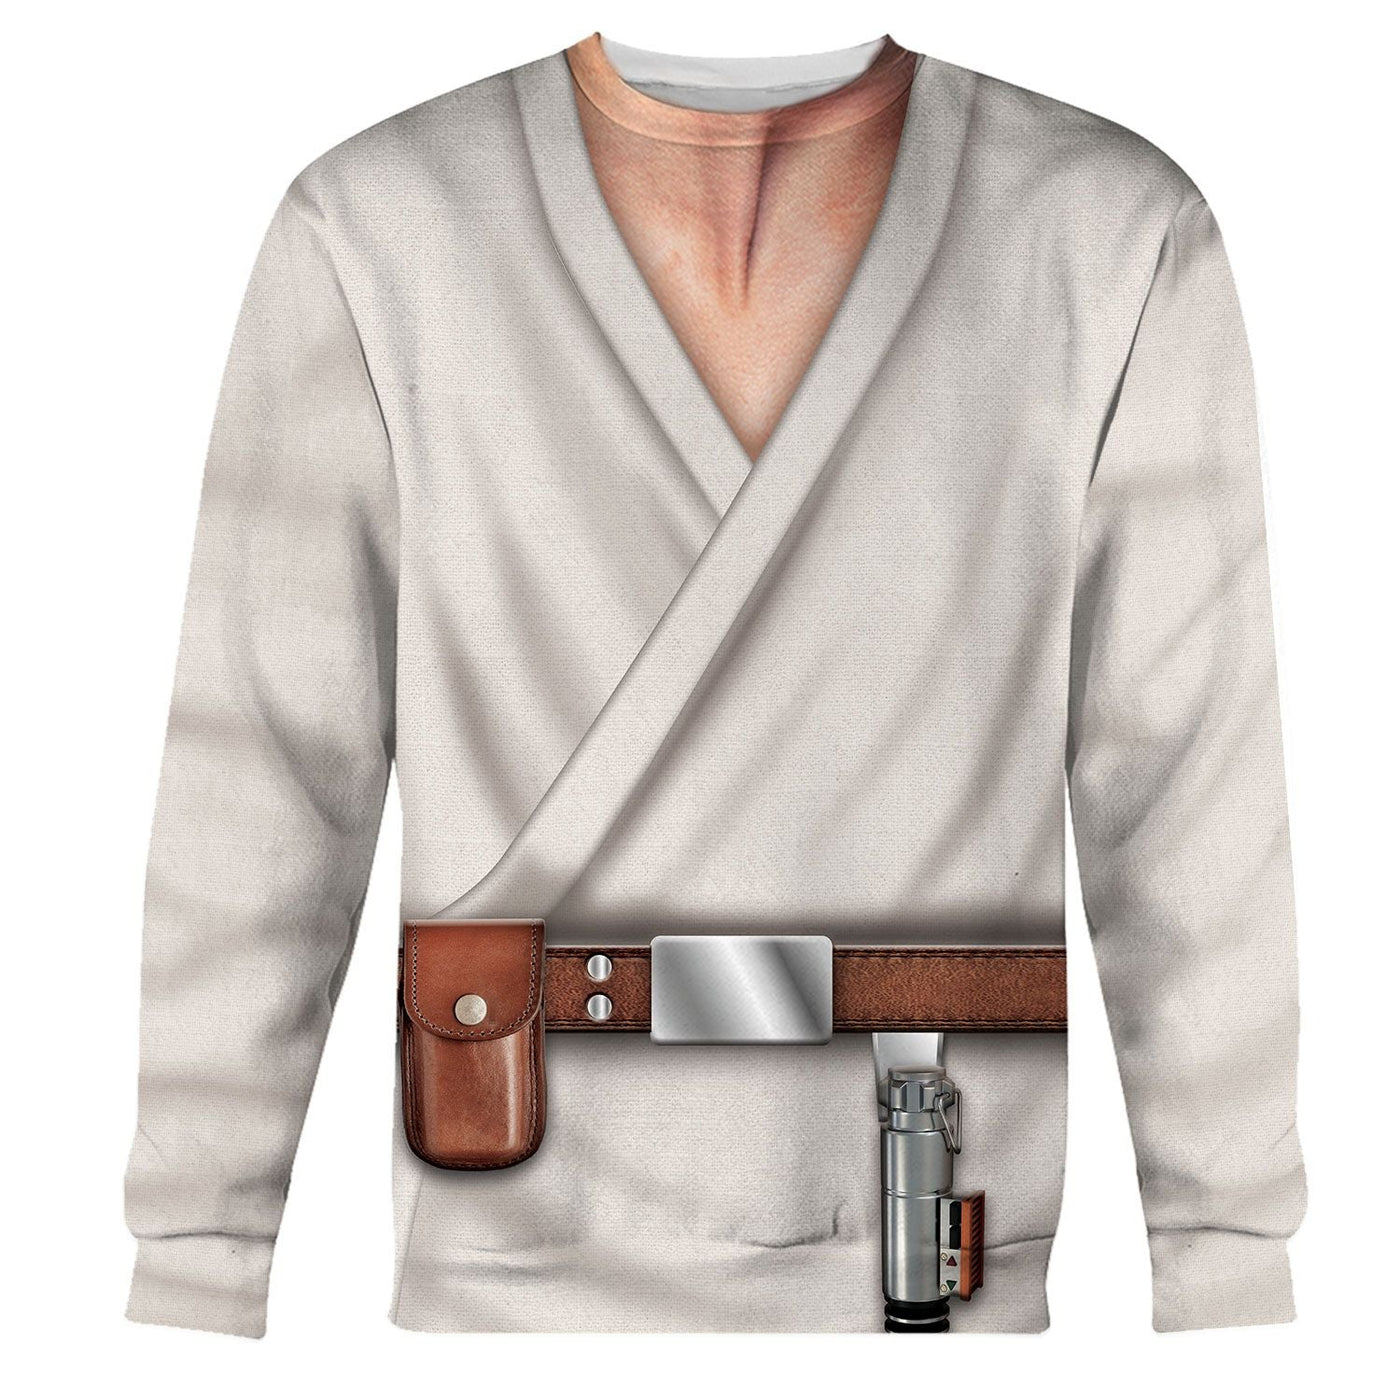 Star Wars Jedi Luke SW Costume - Sweater - Ugly Christmas Sweater